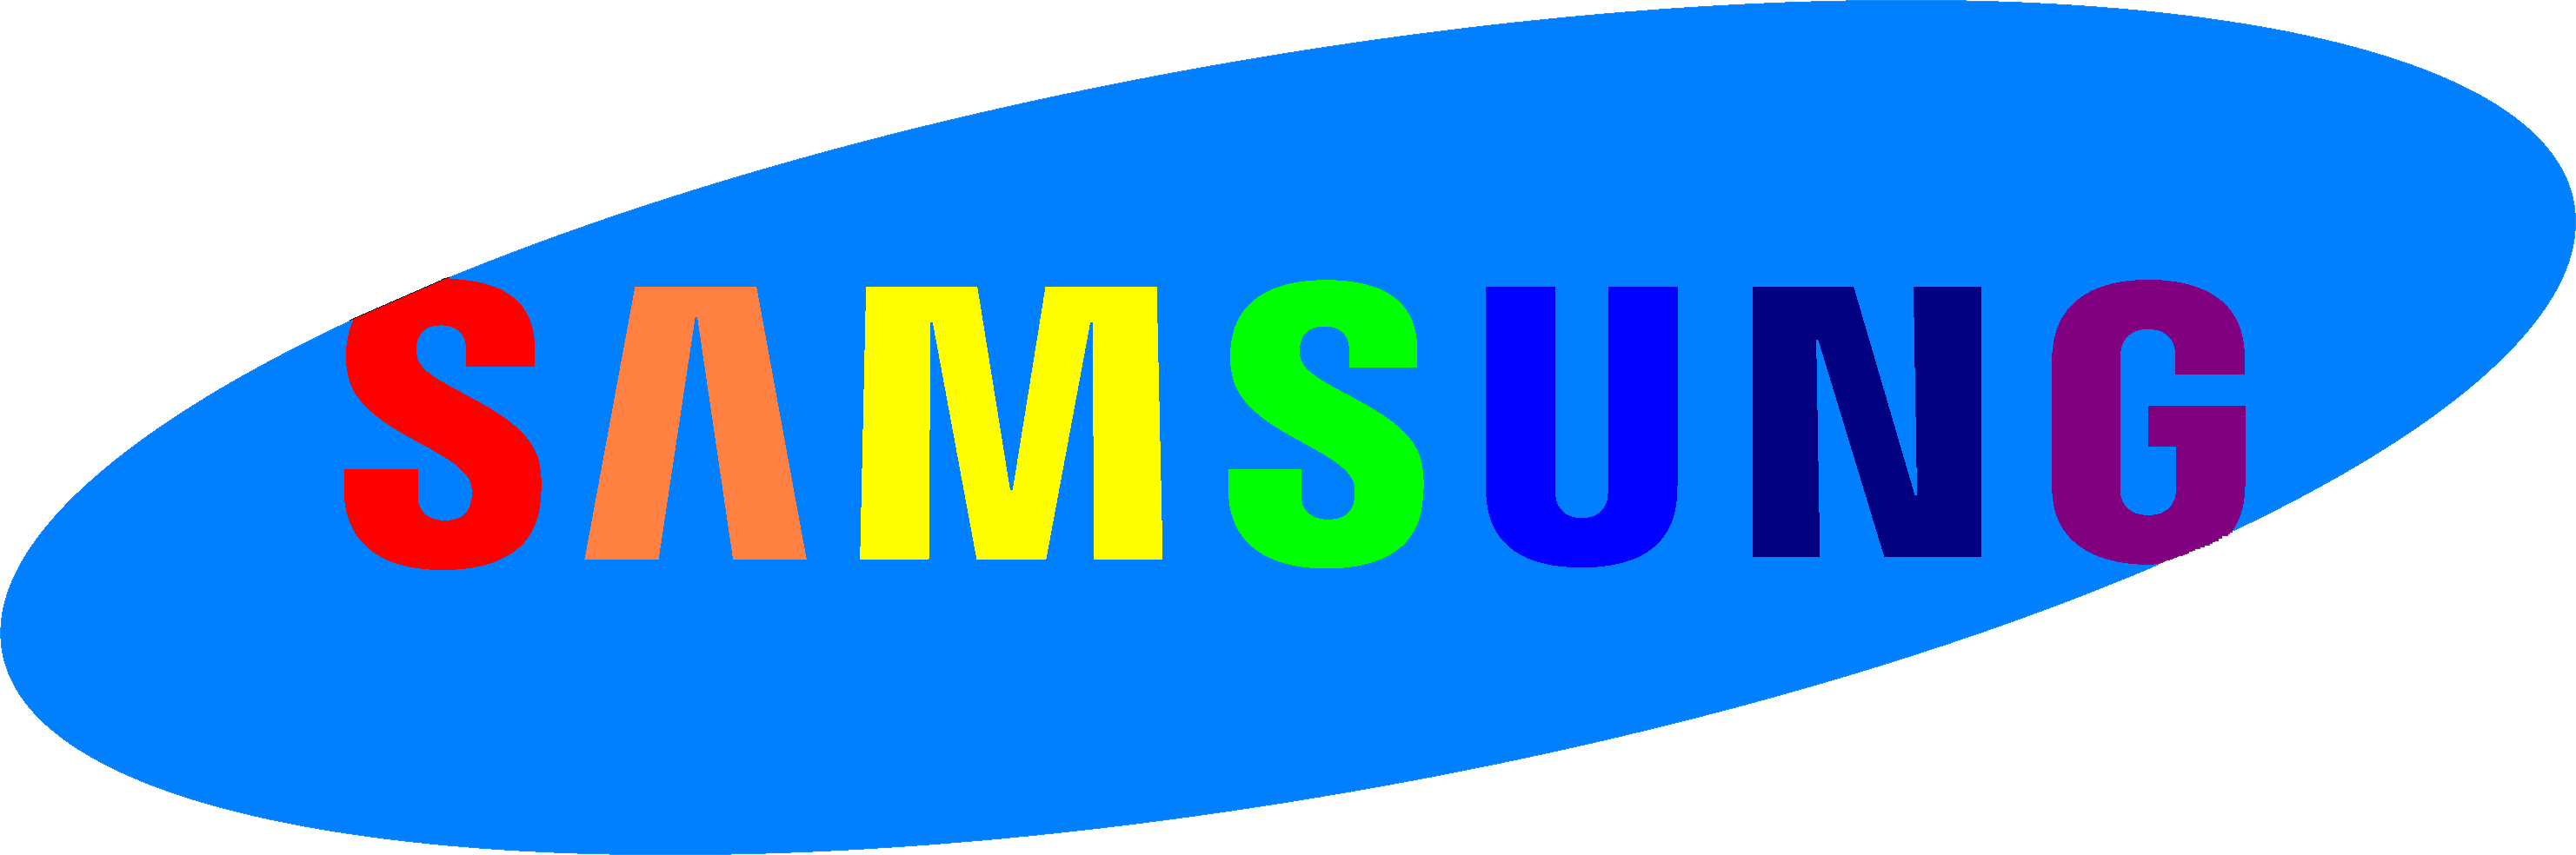 Samsung Mobile Logo - Samsung Mobile Logo Png Image